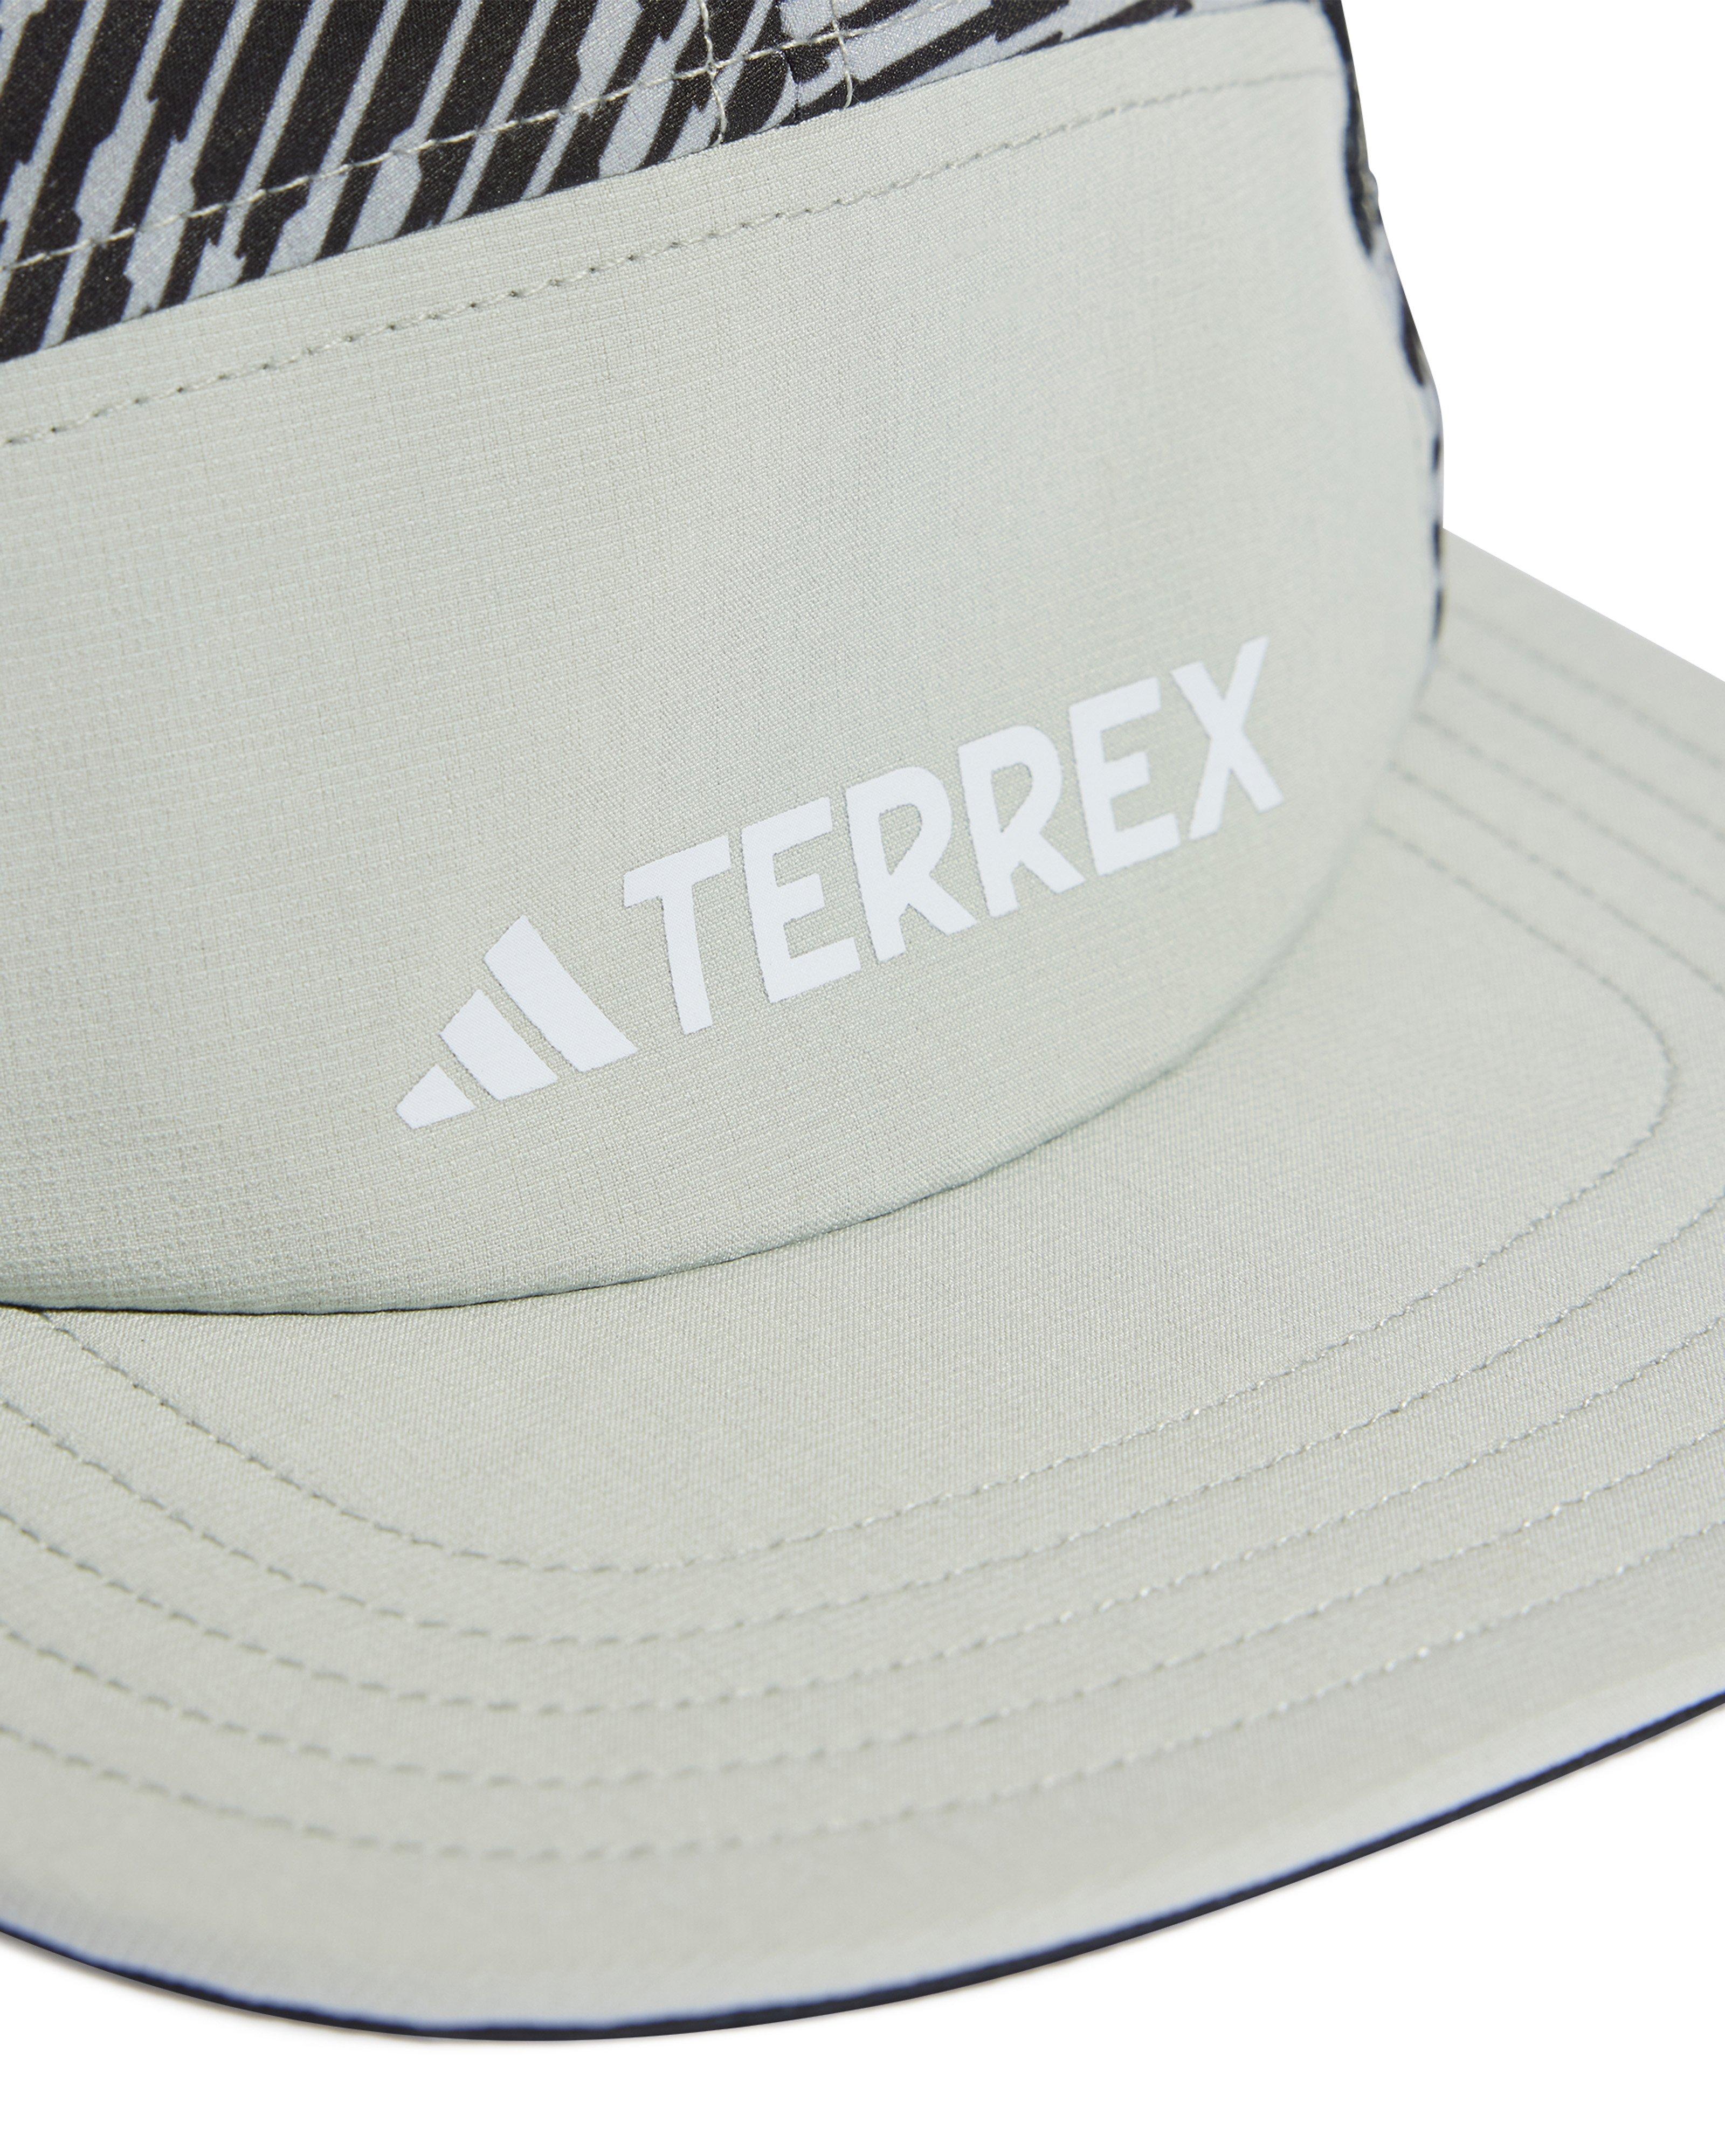 Adidas Terrex 5-Panel Cap -  Silver